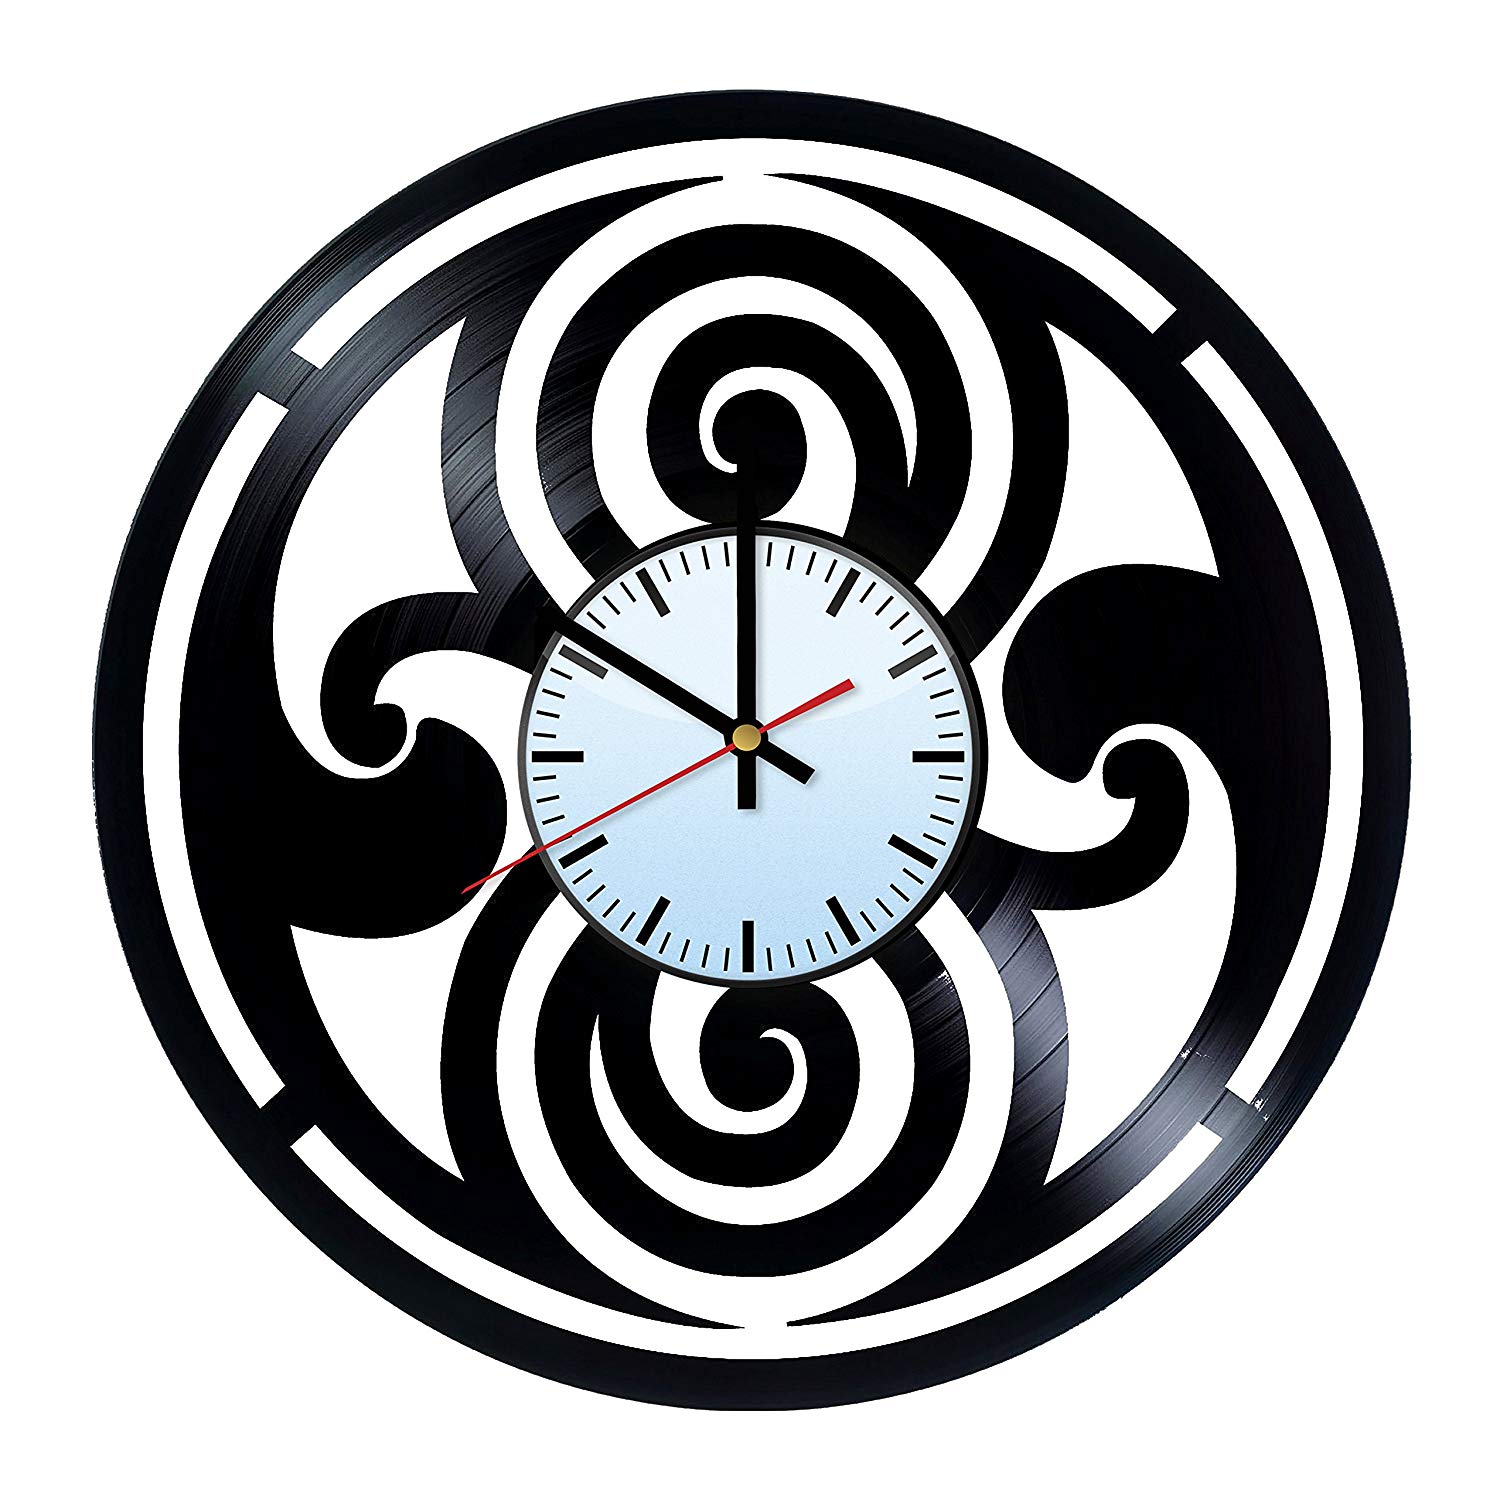 Strange Logo - Amazon.com: Baden Baden Doctor Strange Logo Vinyl Record Wall Clock ...